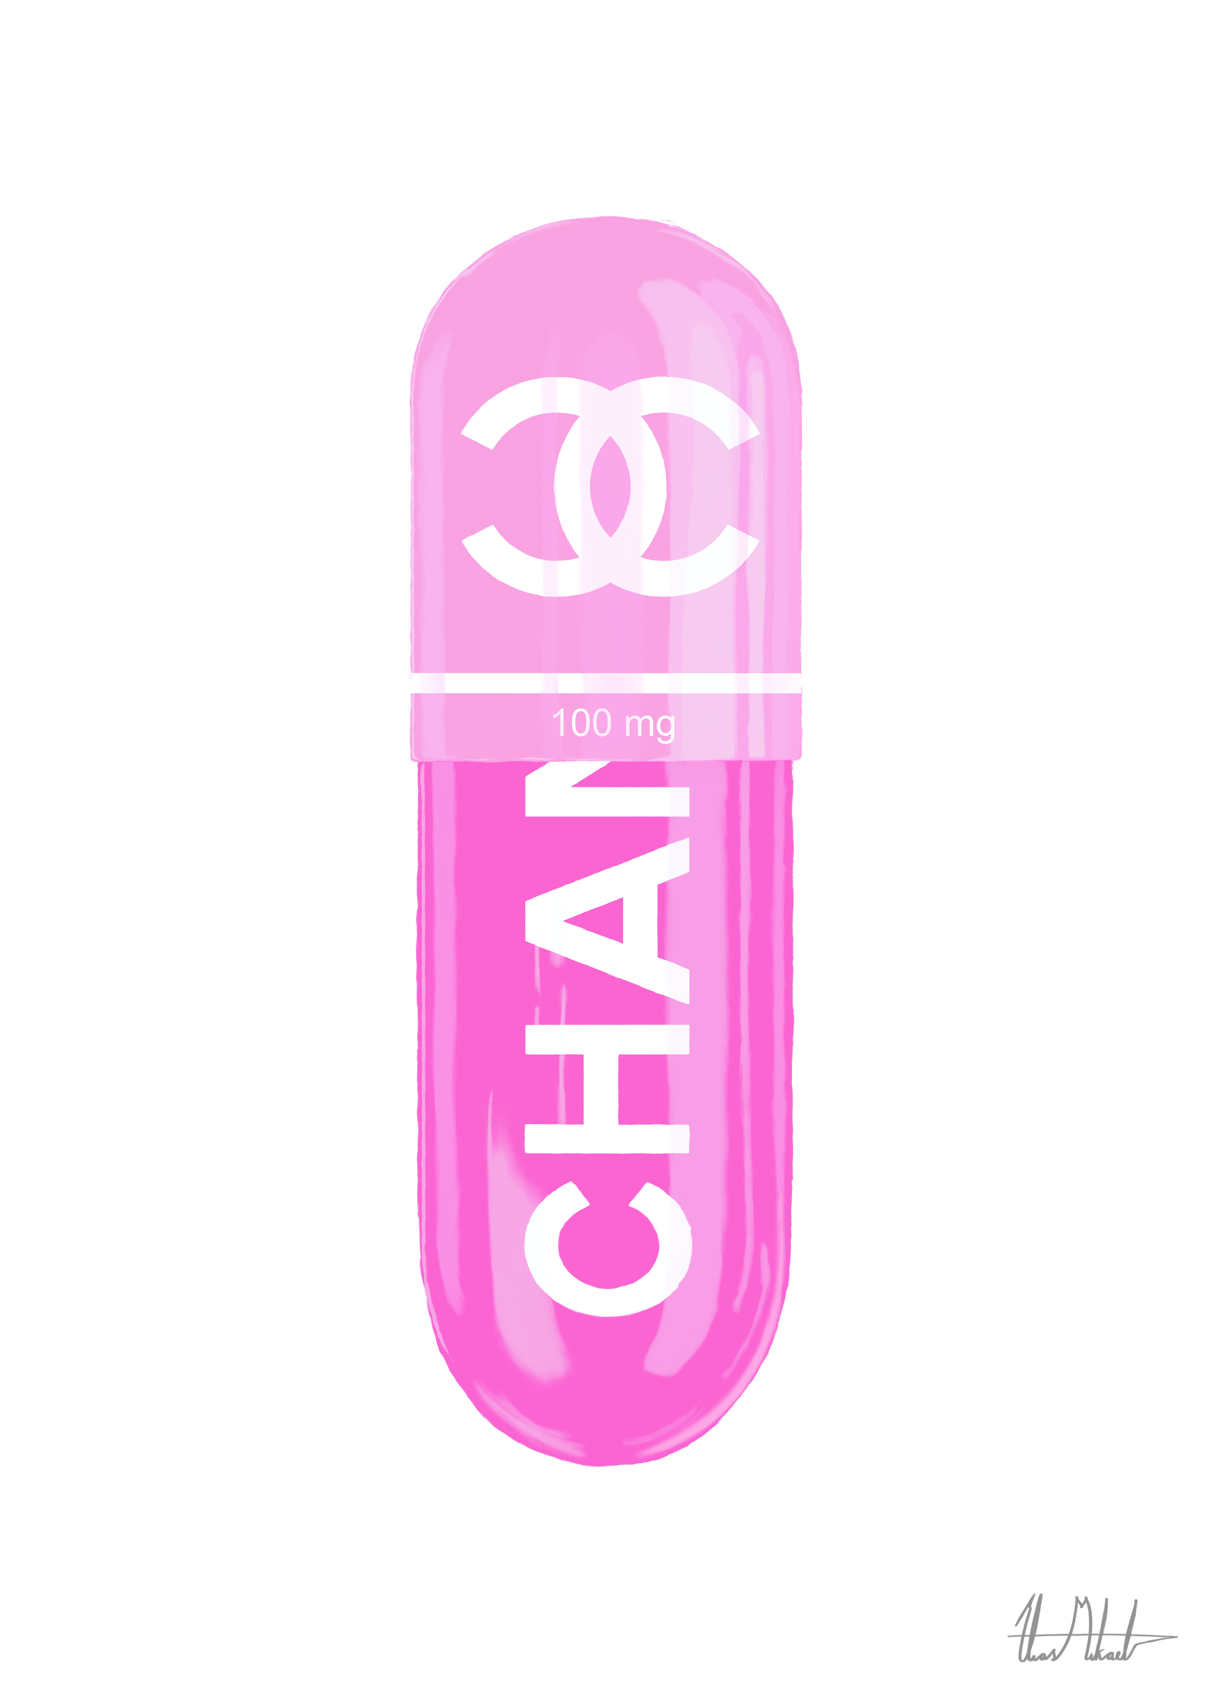 chanel pill bottles